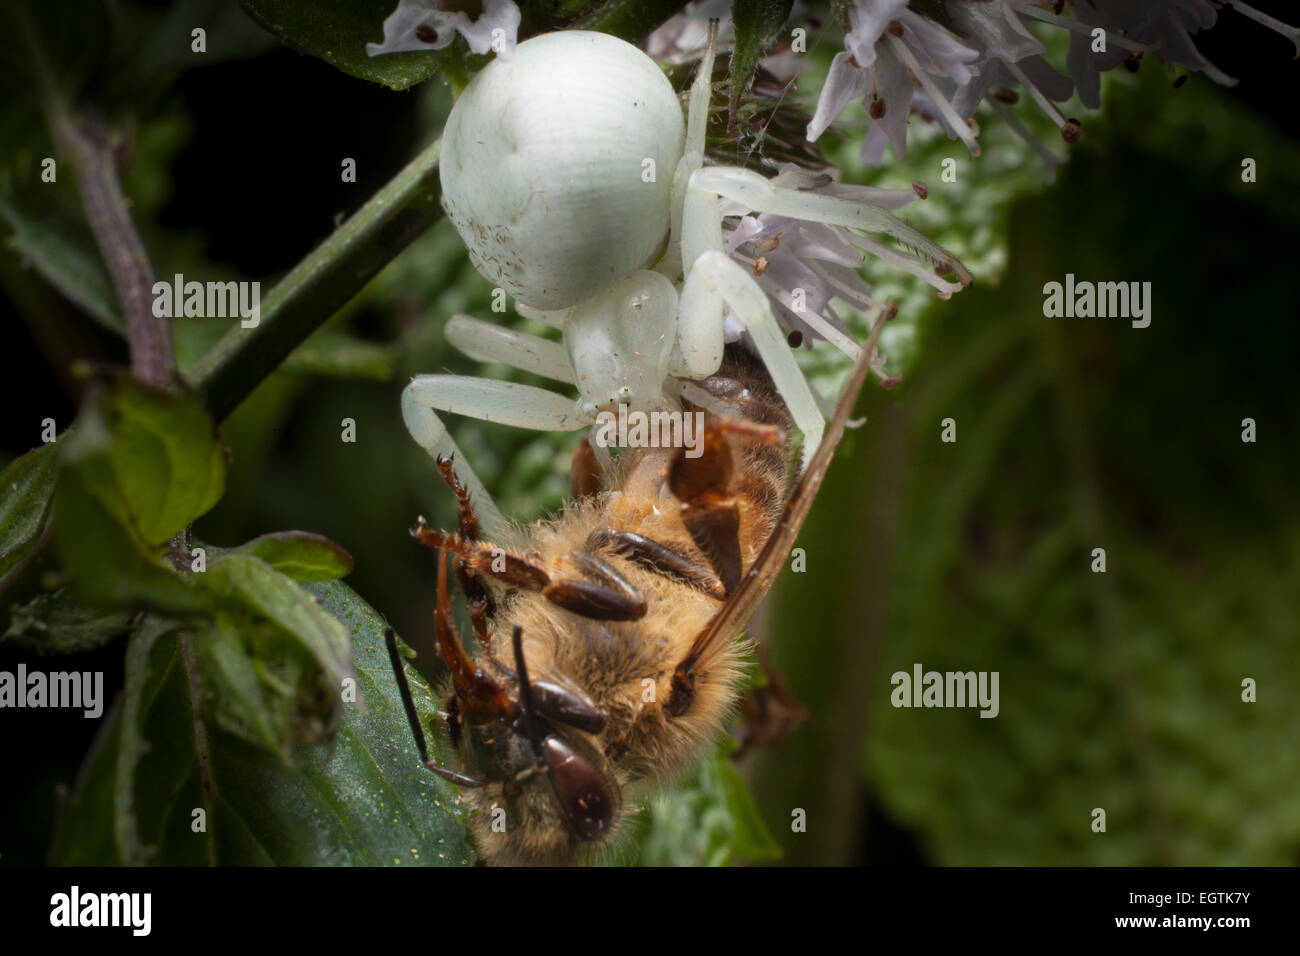 A white crab-spider (Arachnida,Araneae,Thomisidiae), lurking in a mint flower captures a honey-bee. Stock Photo